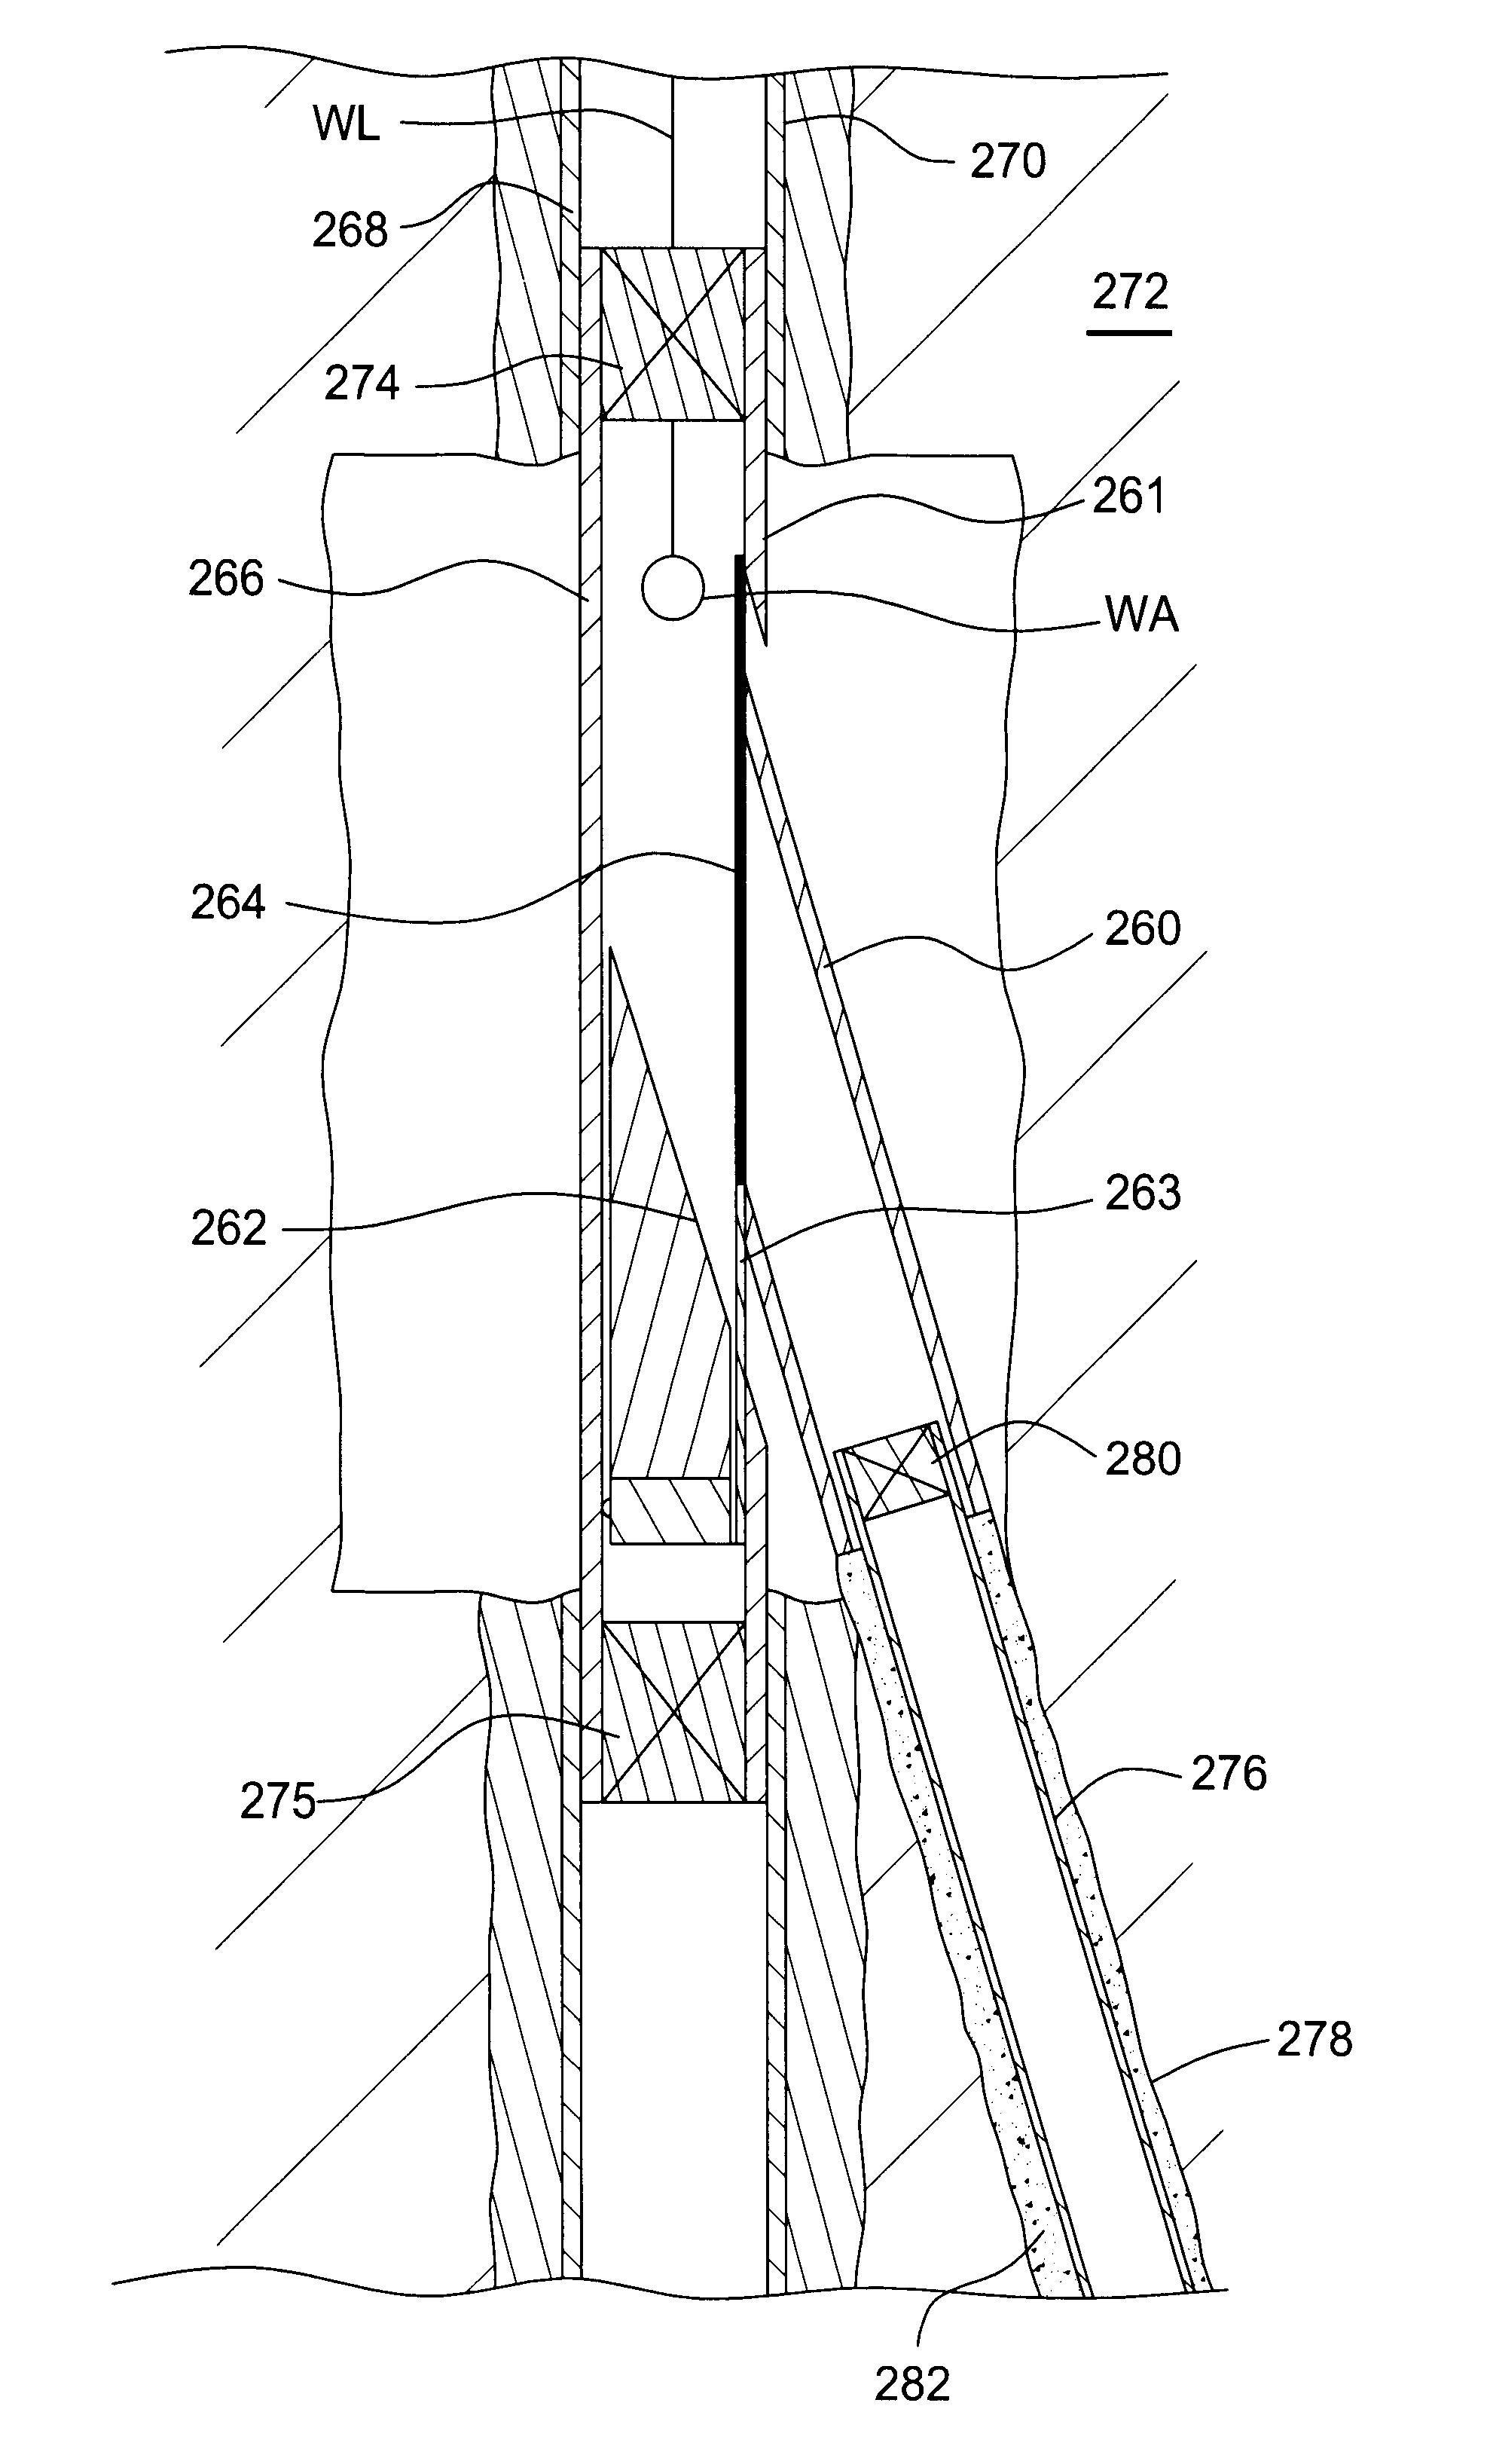 Wellbore liner system